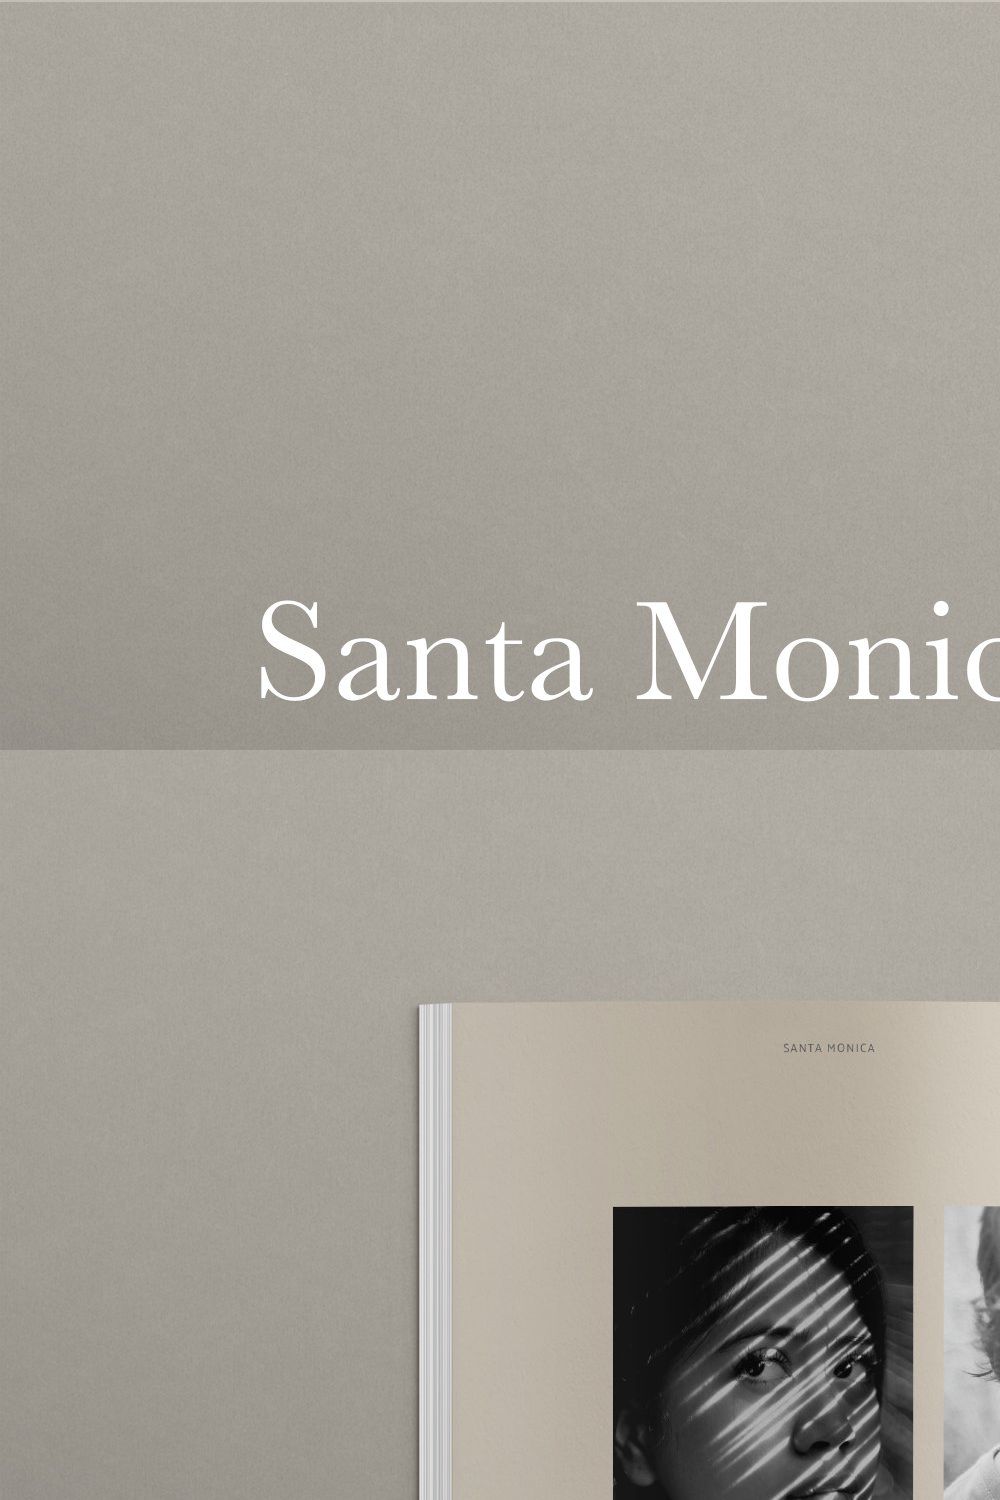 Santa Monica Magazine pinterest preview image.